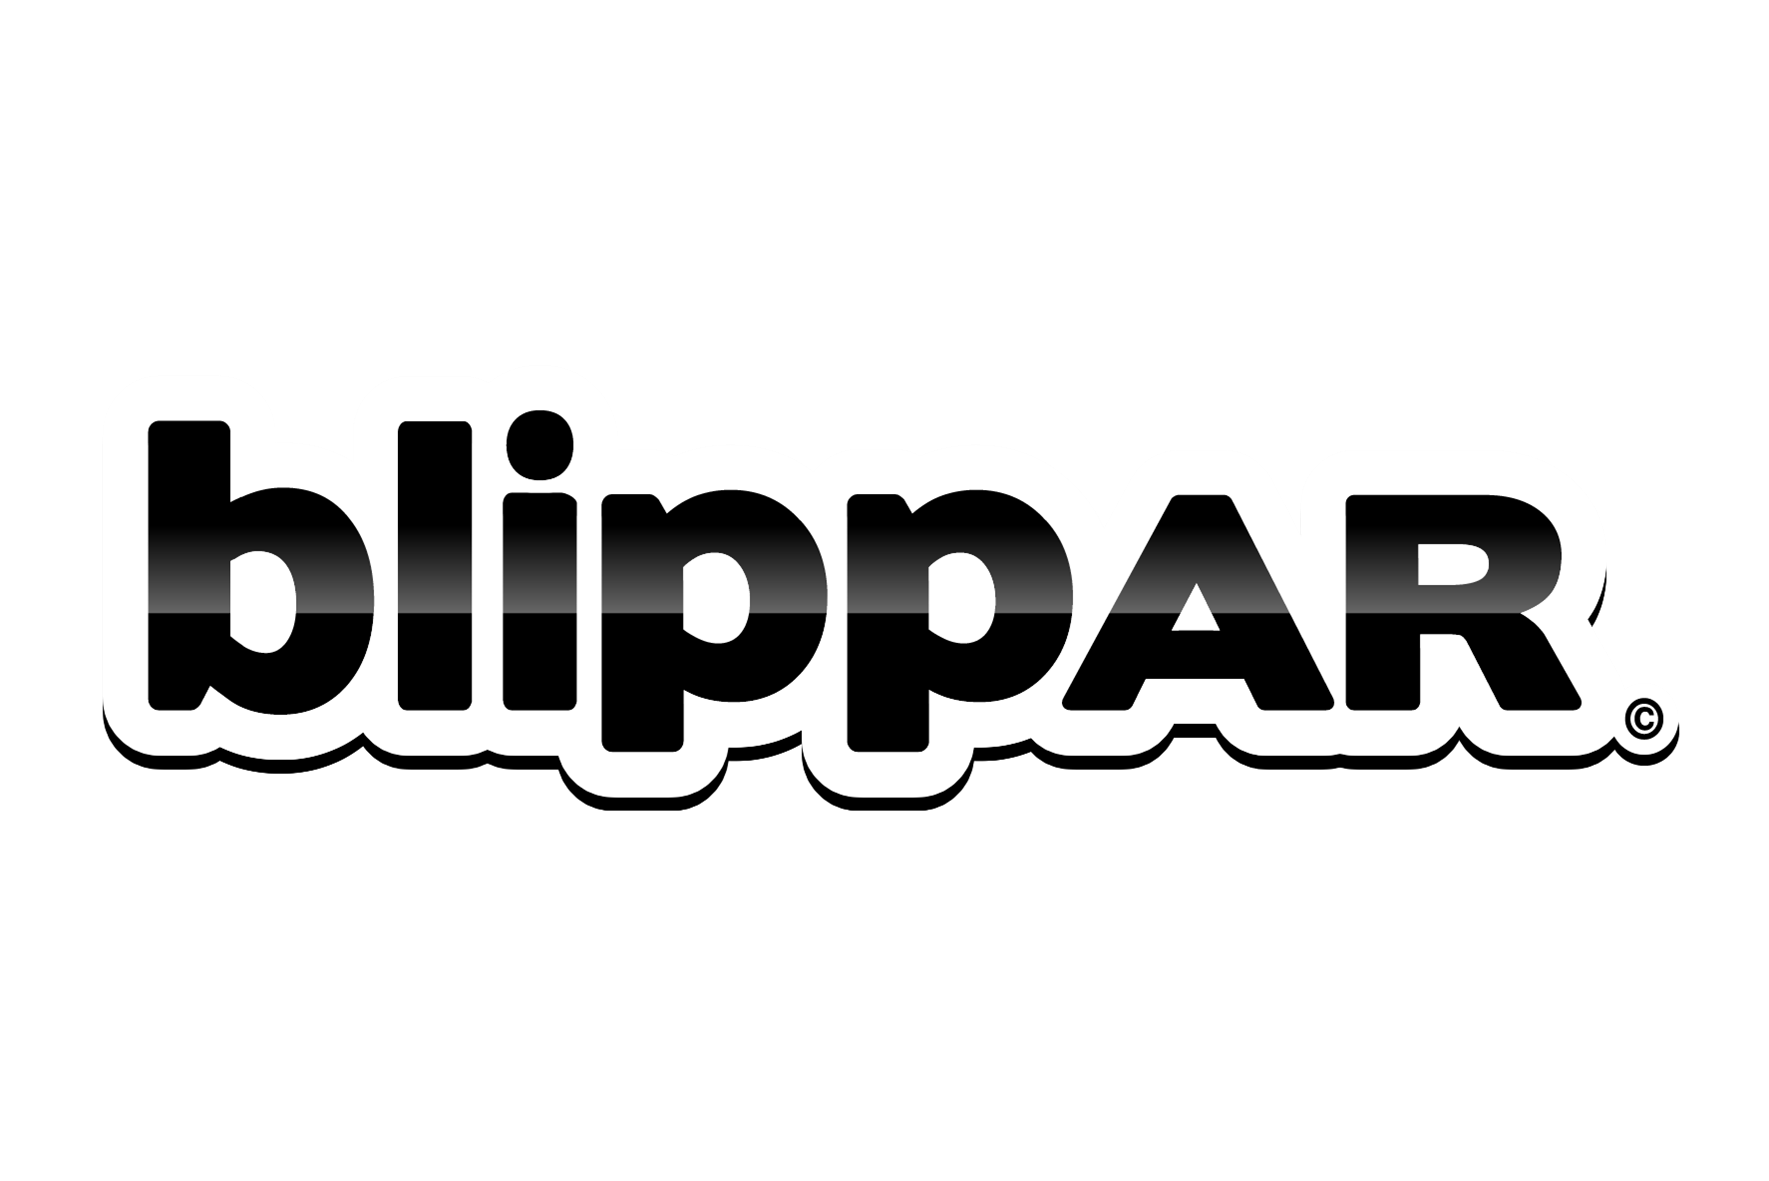 Logo Blippar